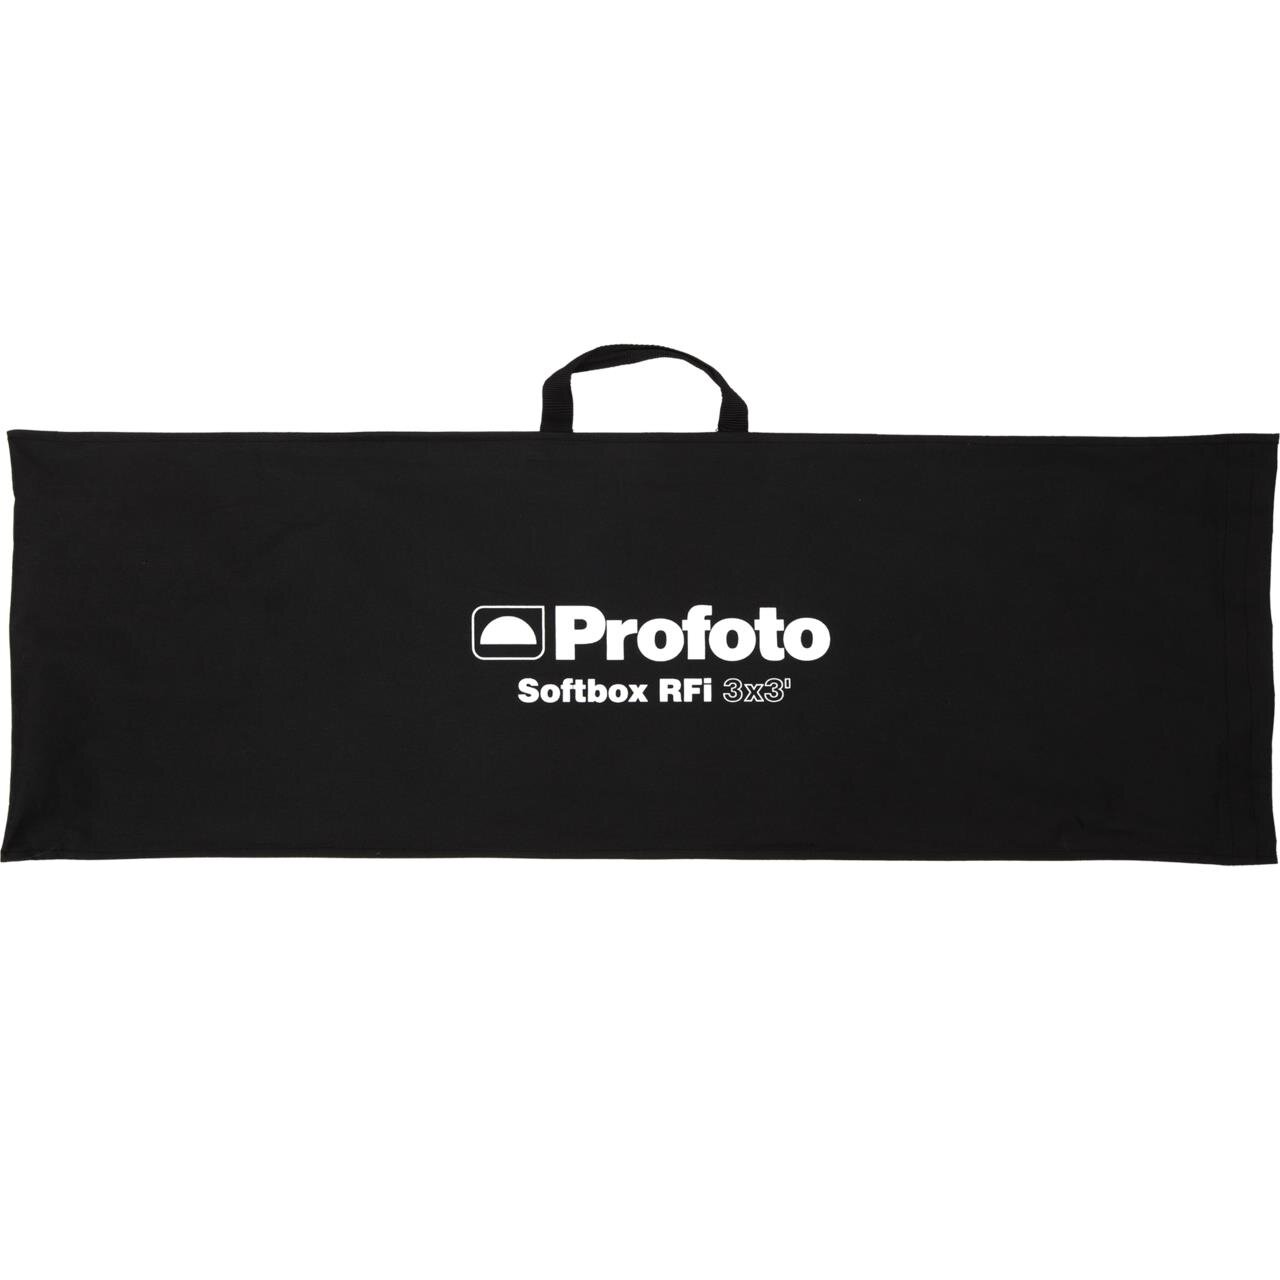 254707_f_profoto-rfi-softbox-3x3-bag_productimage.png.jpeg